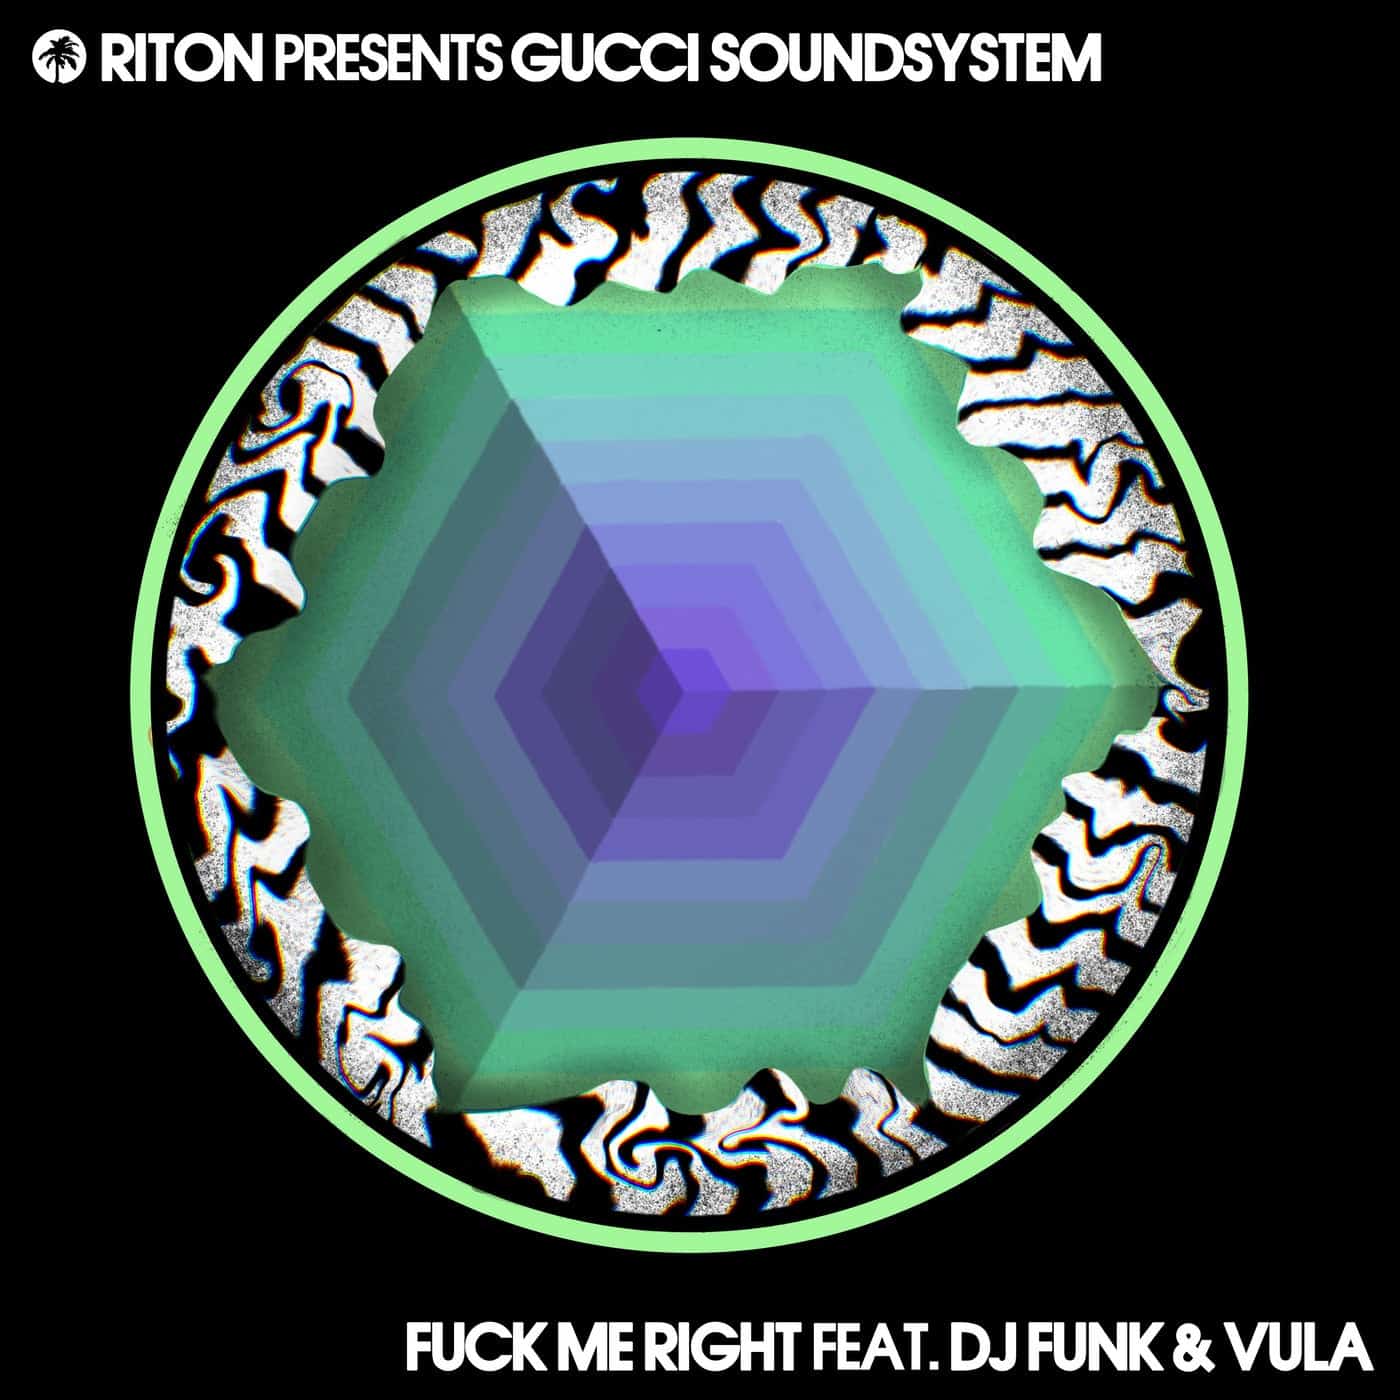 Download Riton, Gucci Soundsystem, DJ Funk, Vula - Fuck Me Right feat. DJ Funk & Vula on Electrobuzz